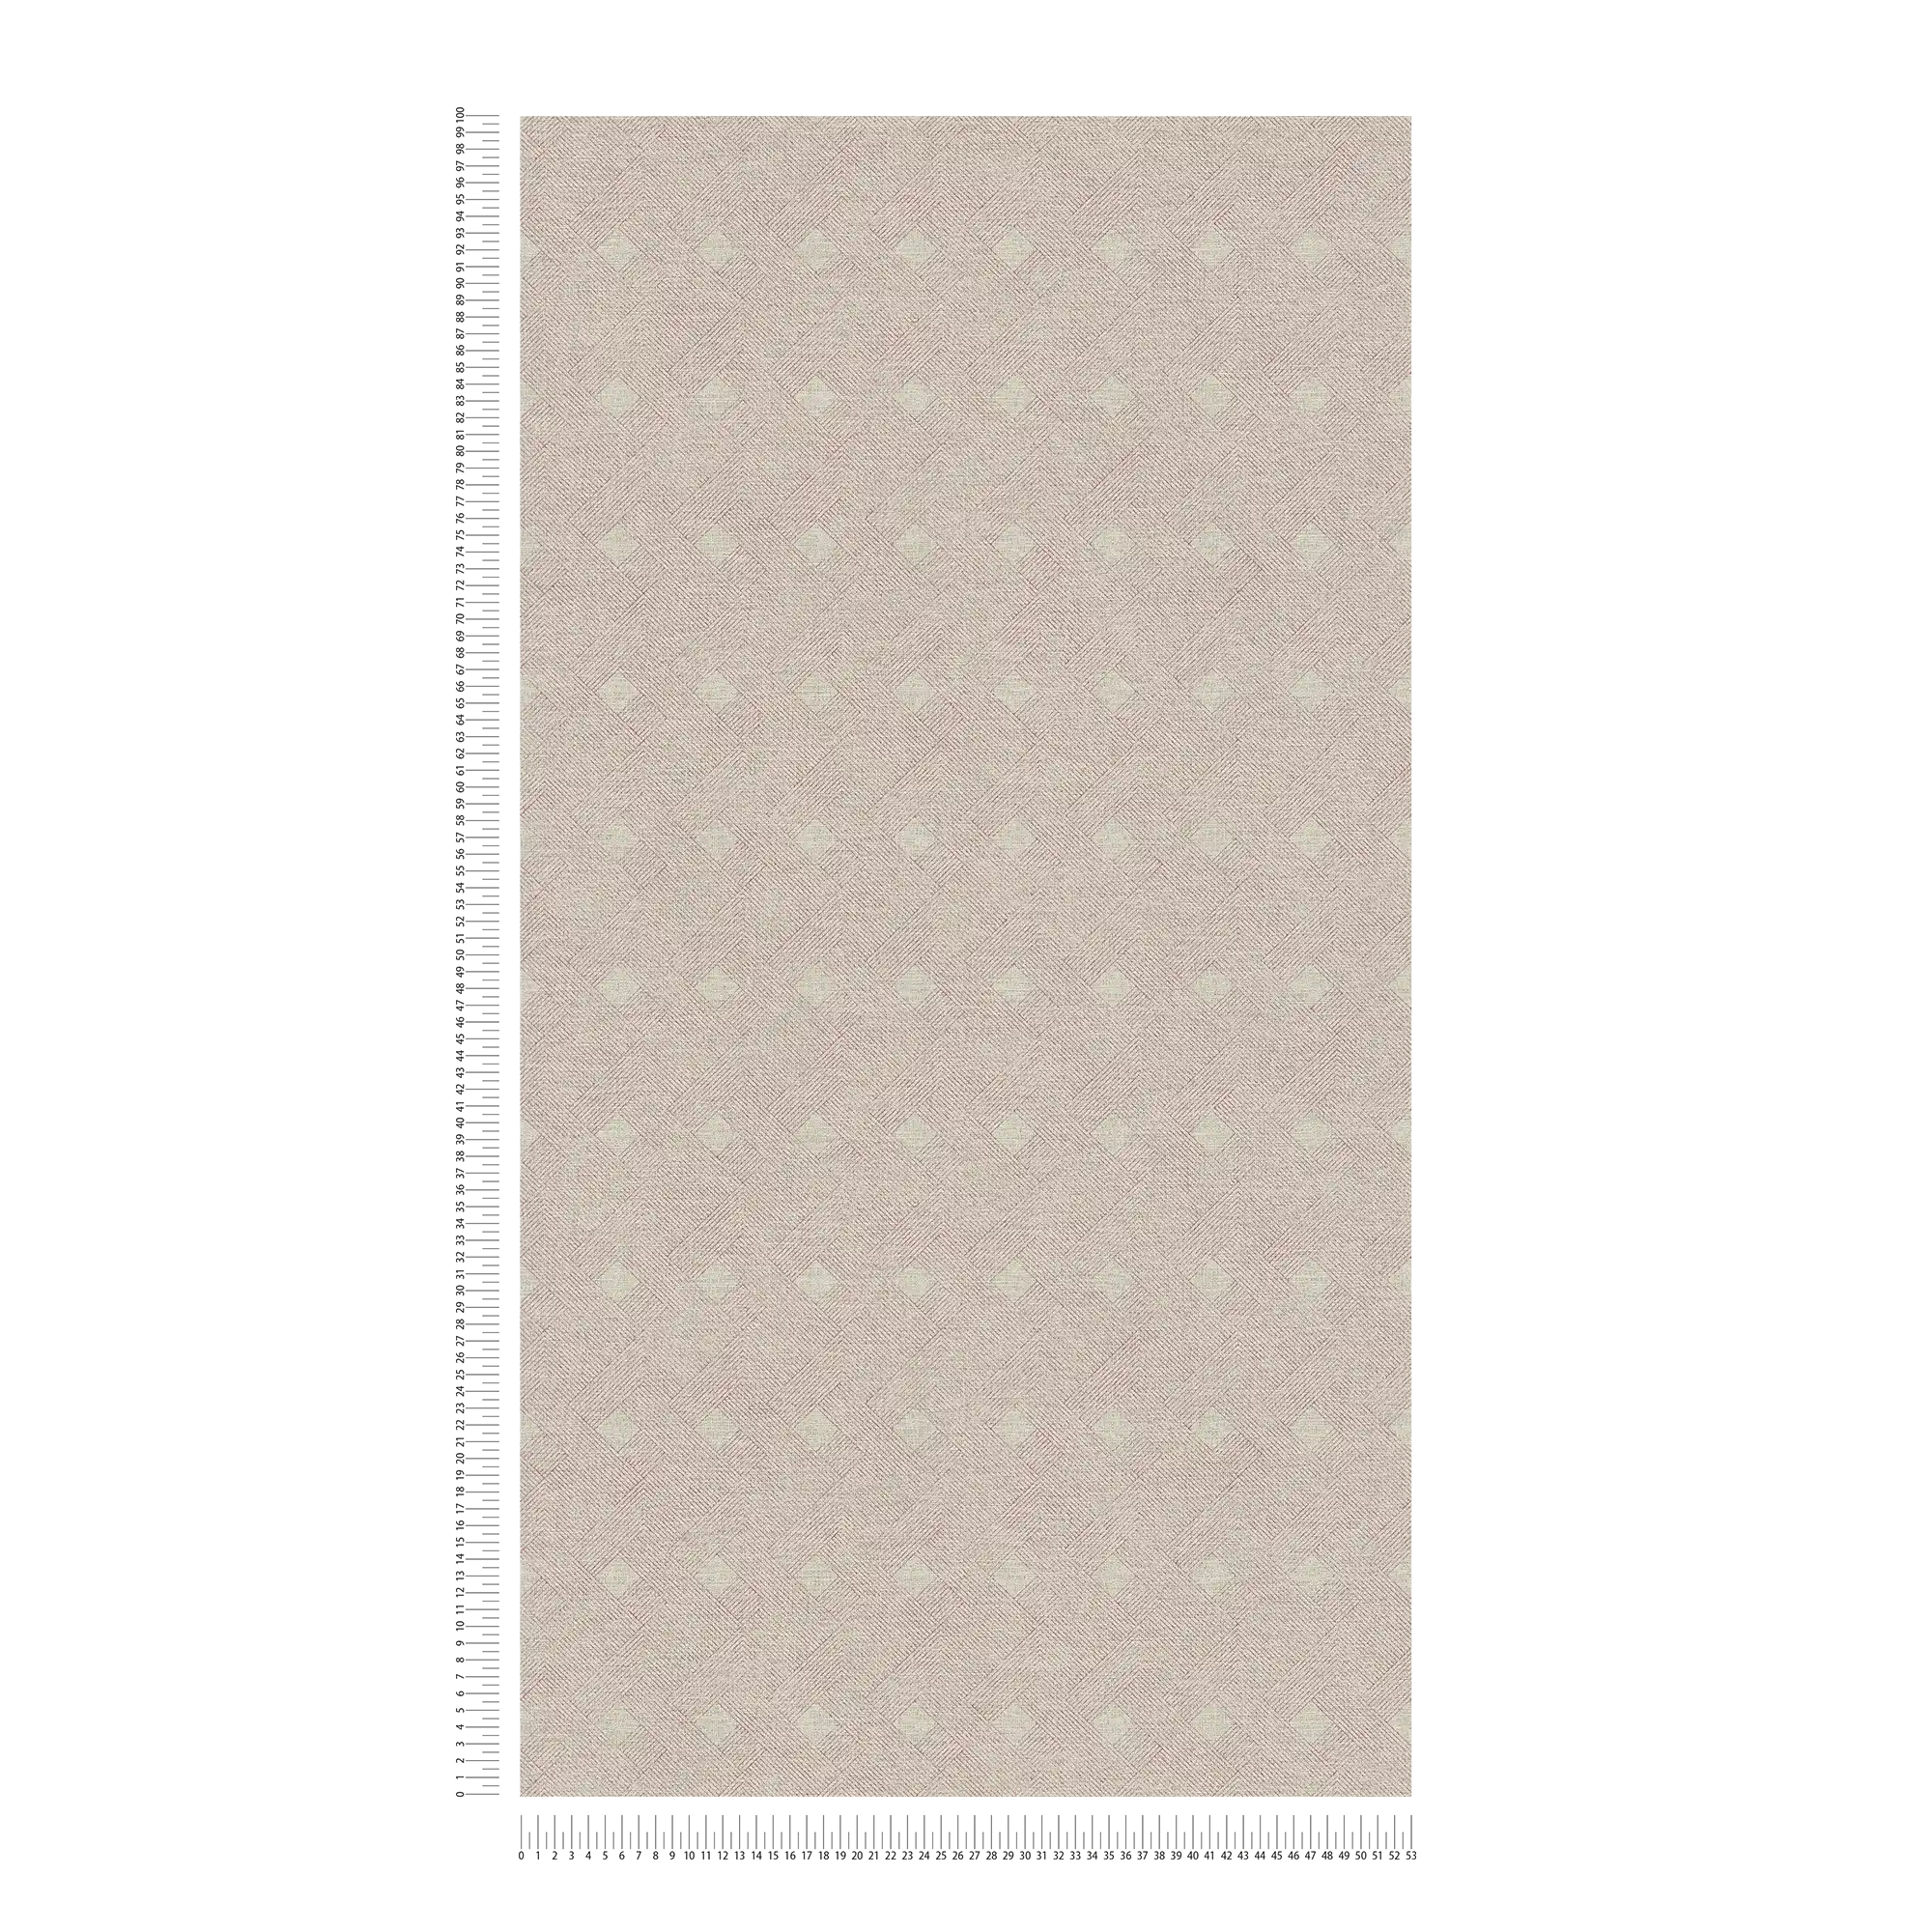             Pattern wallpaper lines & diamonds in vintage textile look - beige, red
        